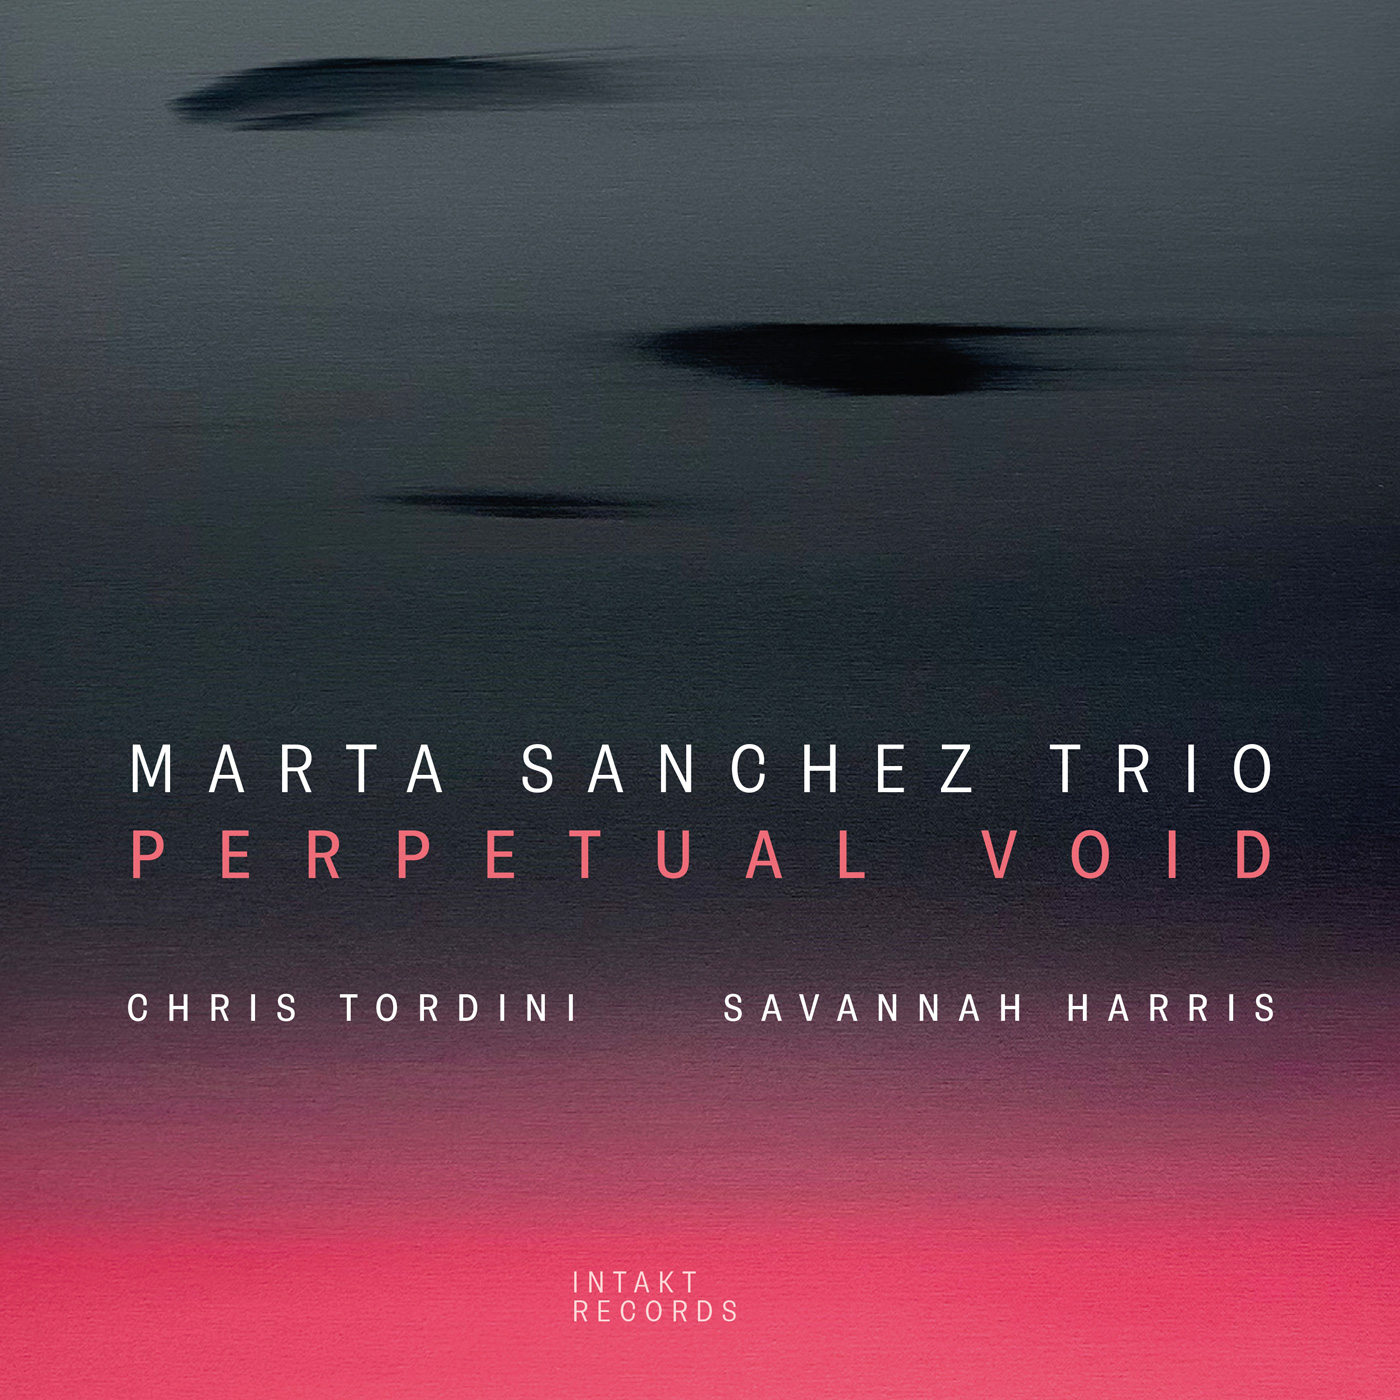 Cover Web:MARTA SANCHEZ TRIO
feat. Chris Tordini and Savannah Harris
PERPETUAL VOID. Intakt CD 421